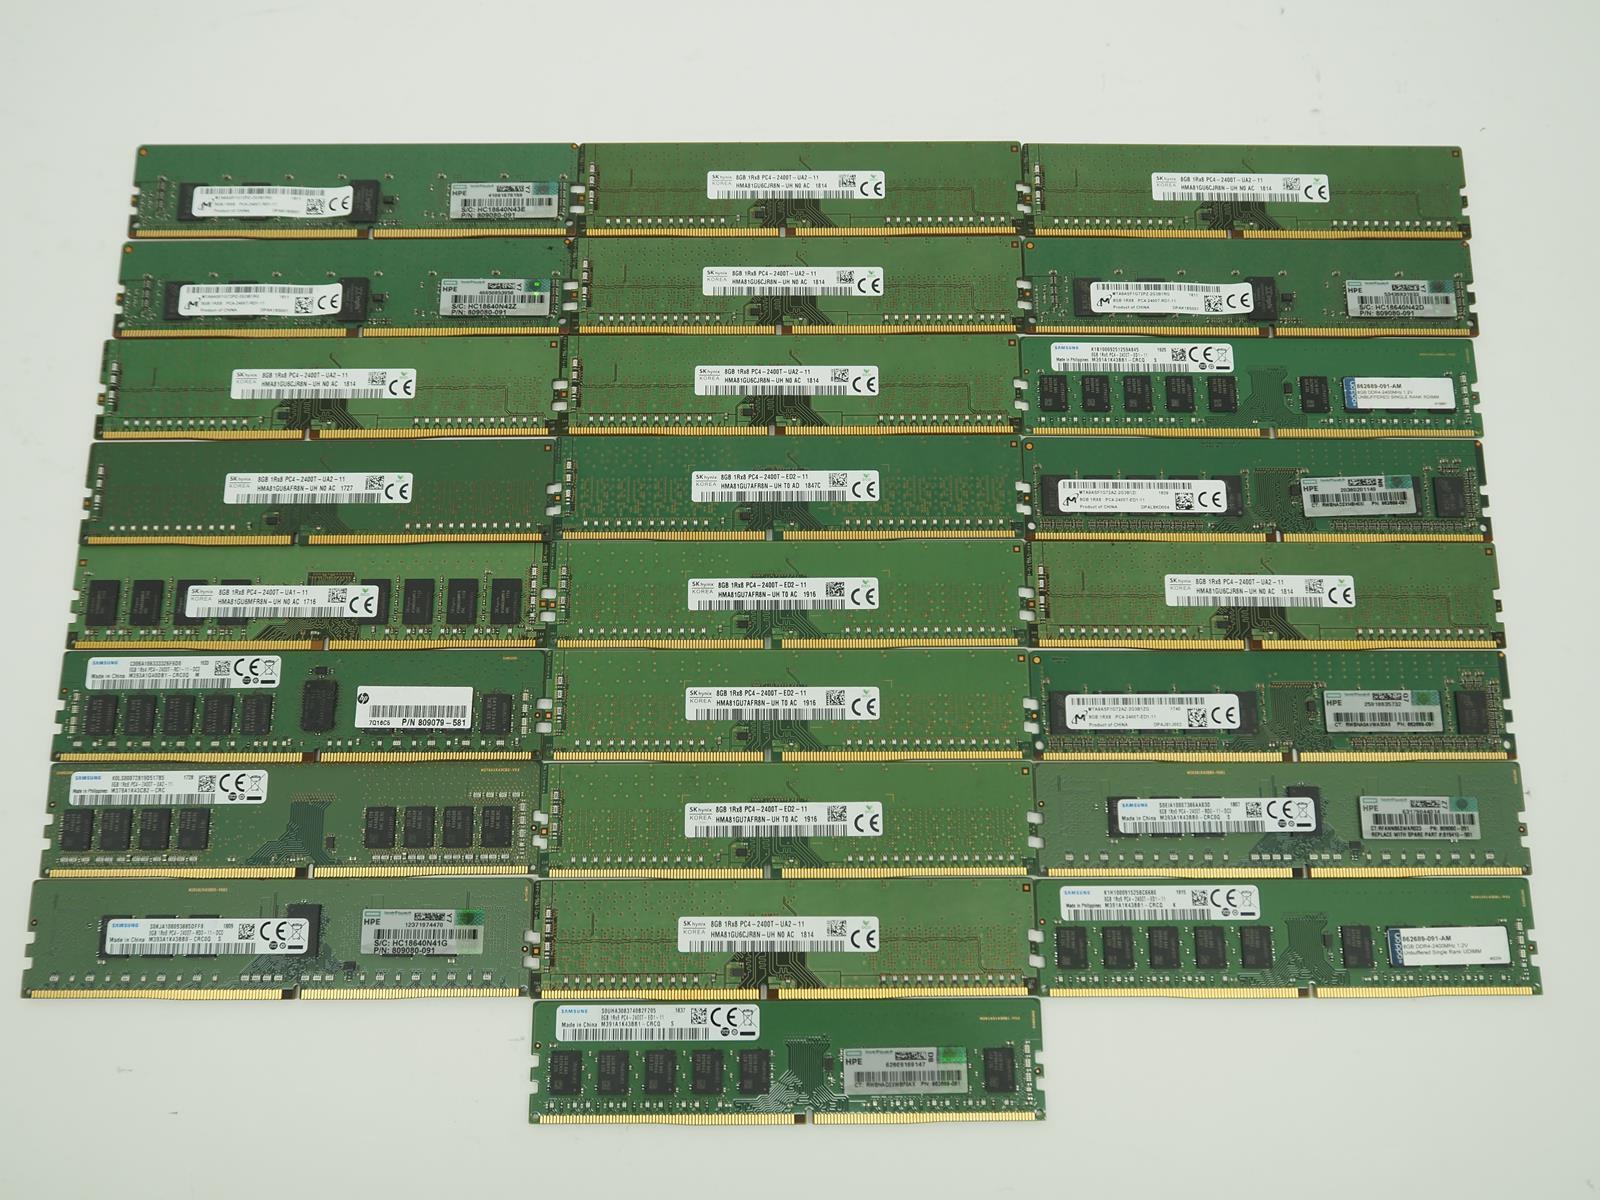 Lot of 25 8GB PC4-2400T Ram / Memory - Mixed Brand (Samsung,SK Hynix,etc.)